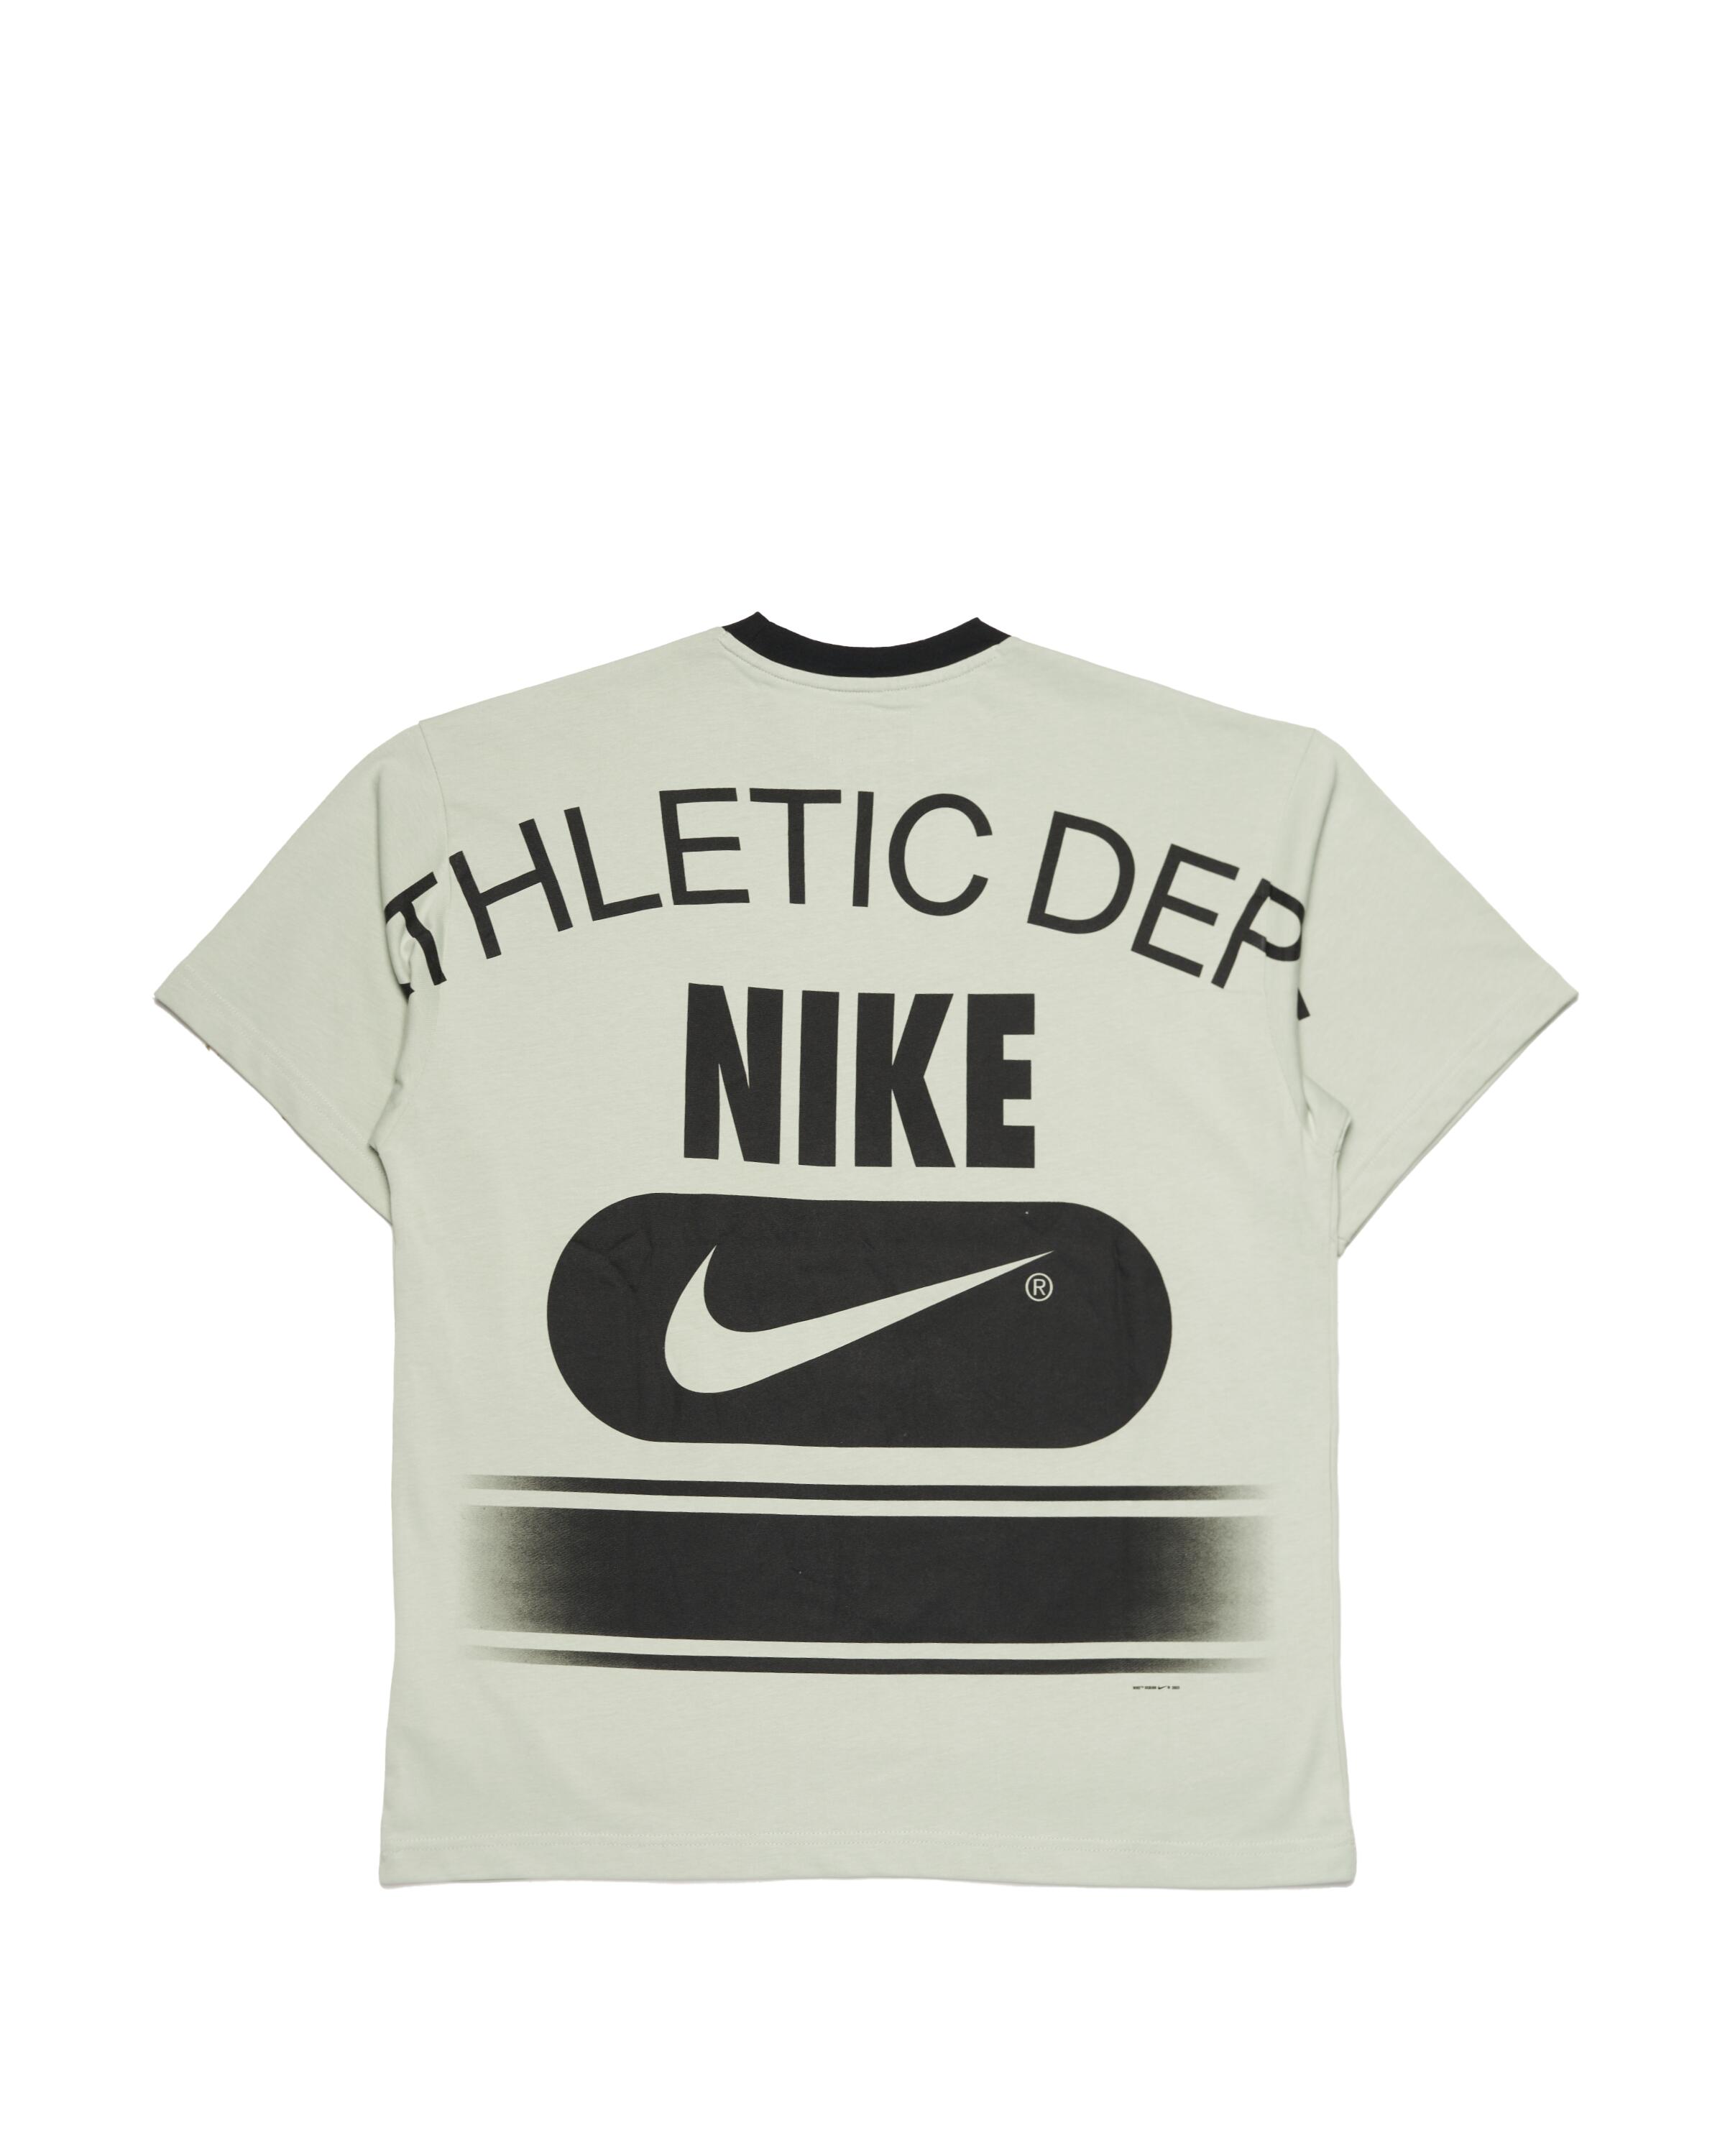 Nike MASSIVE DEPT TEE